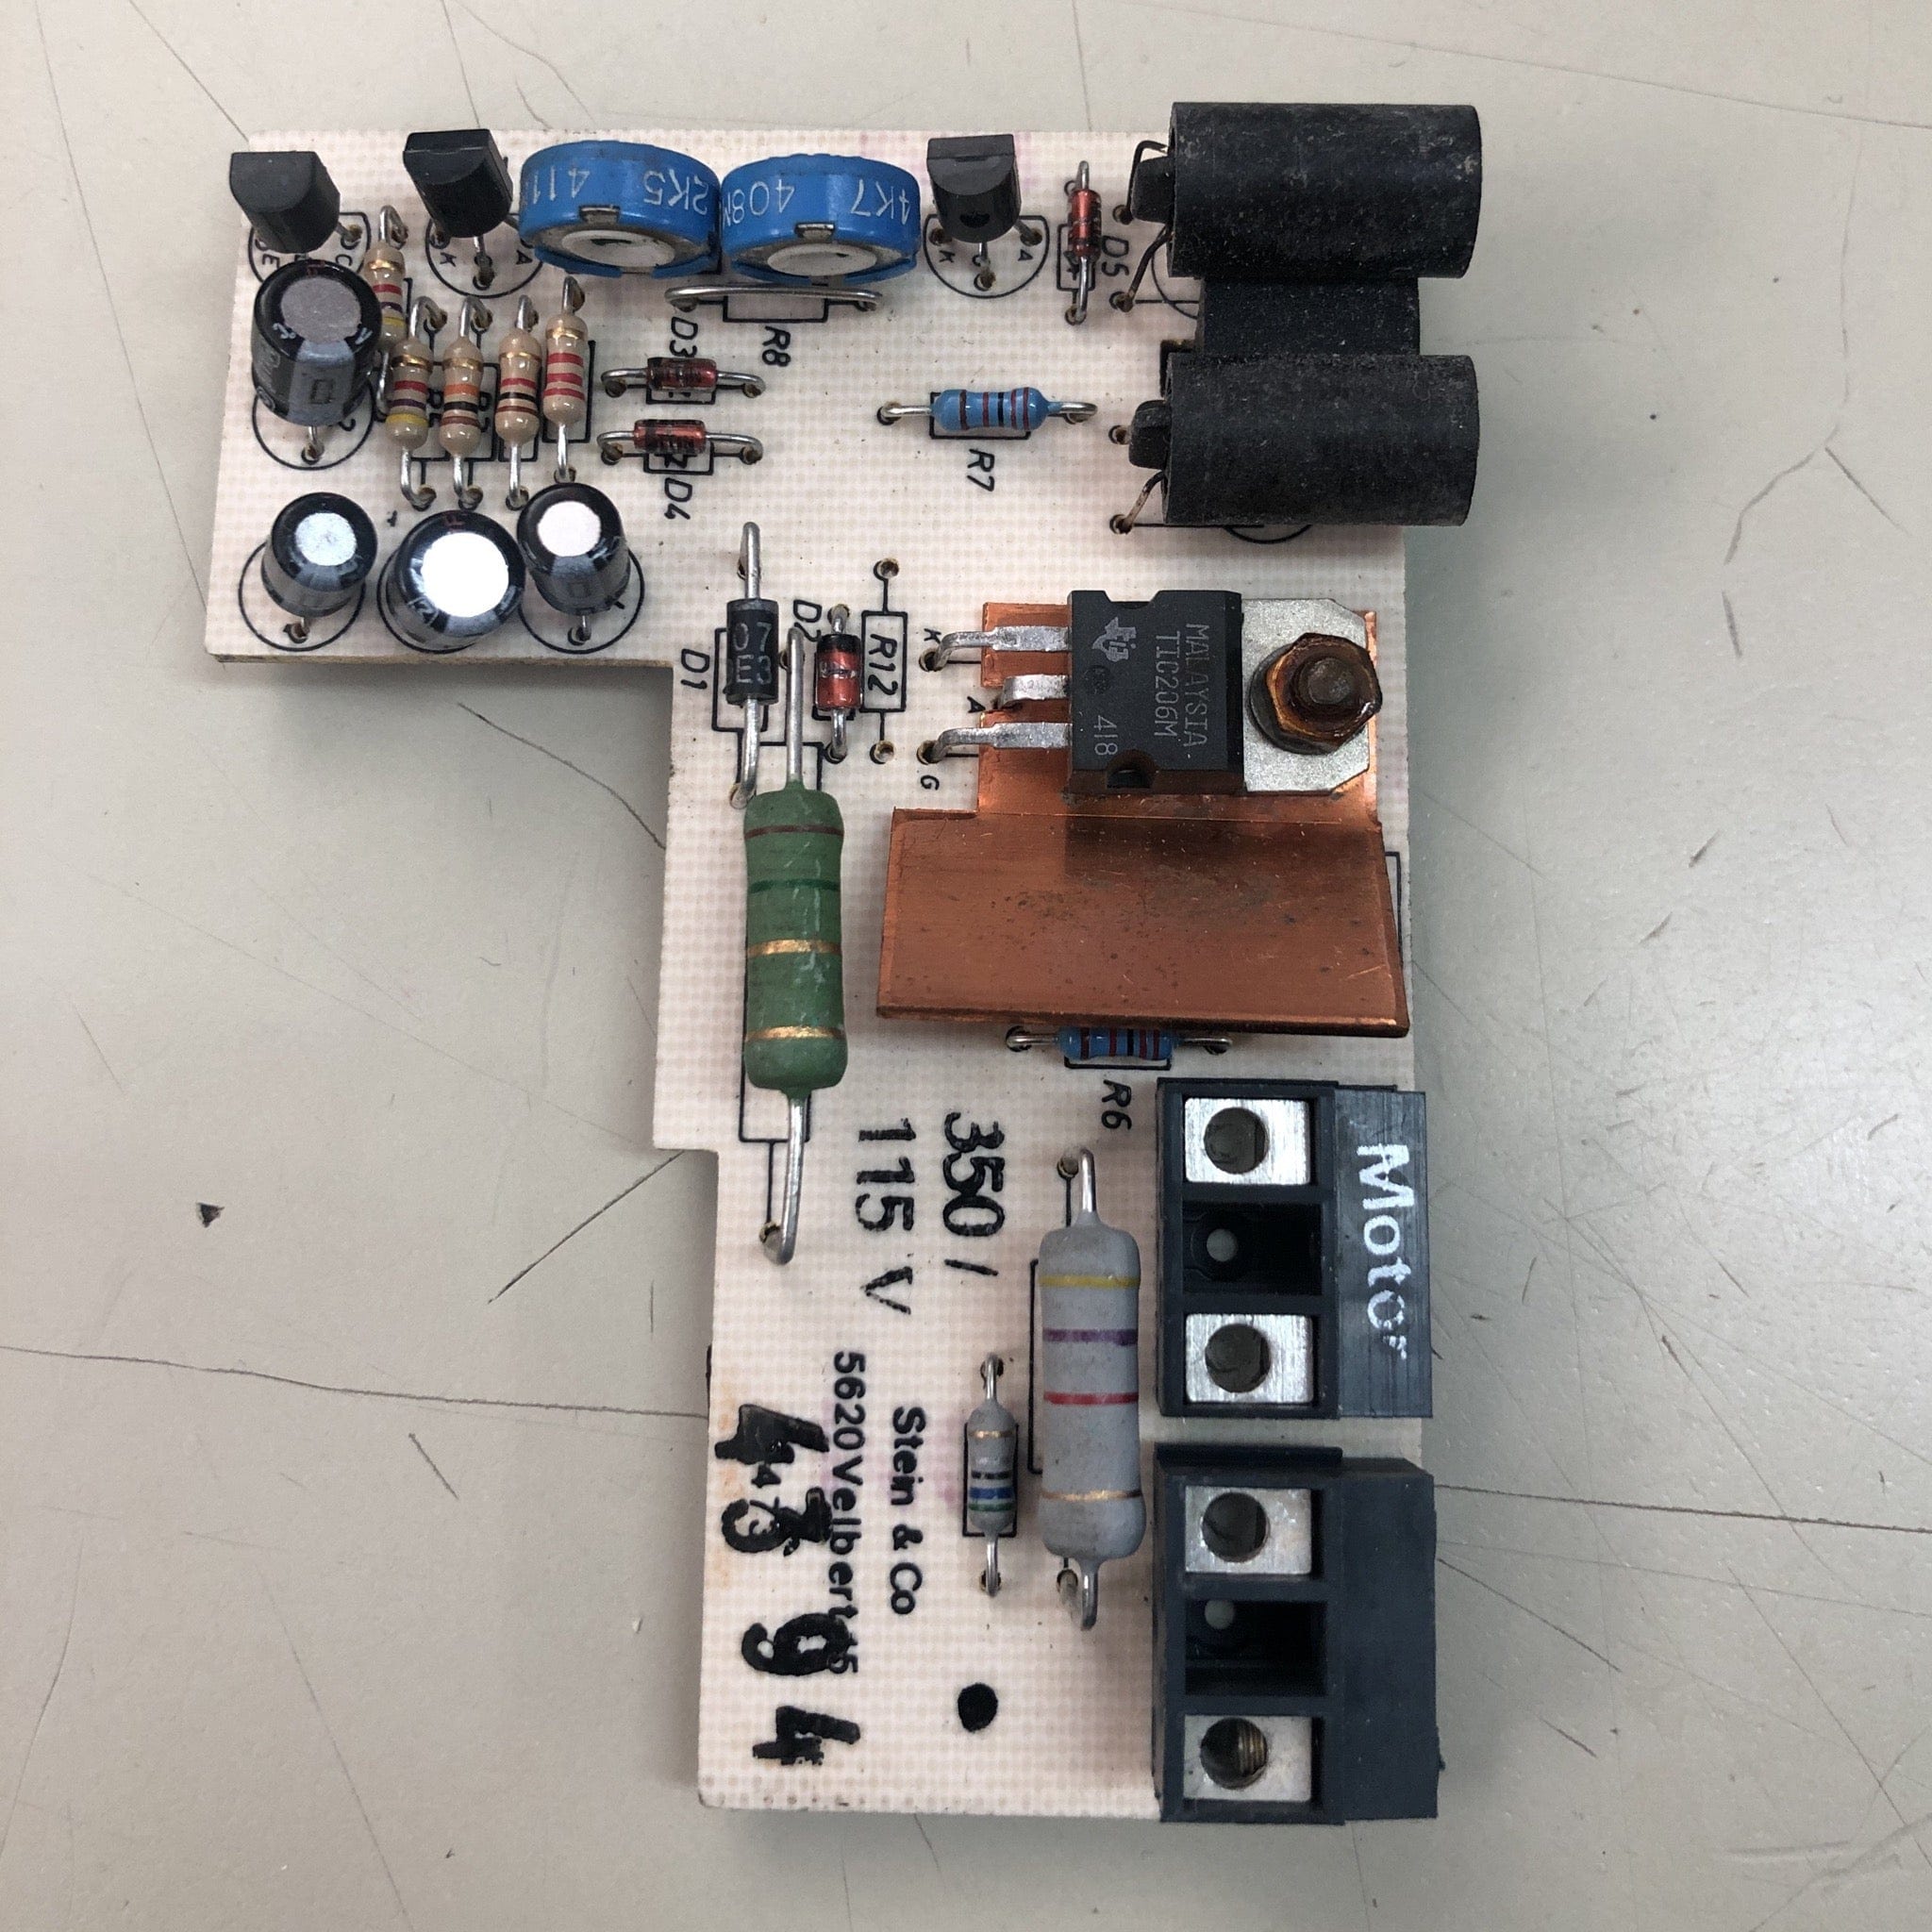 Sebo PCB - printed circuit board 350 115v